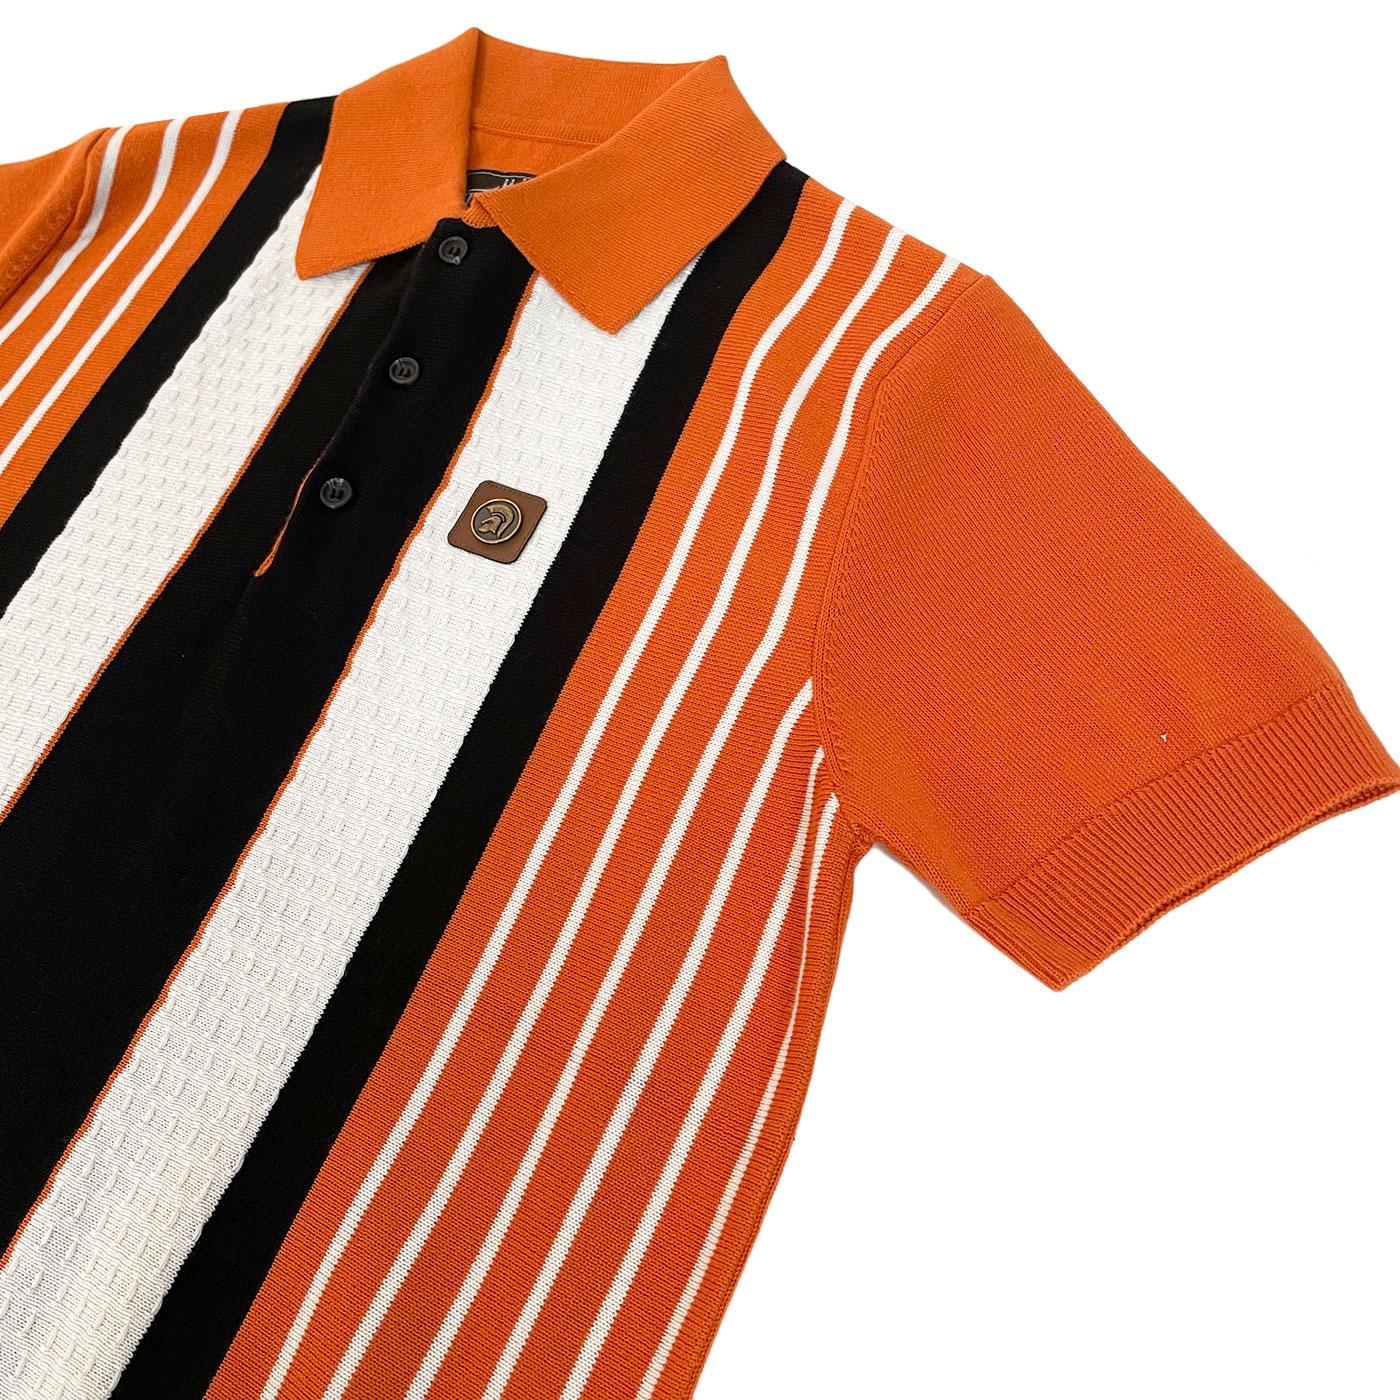 TROJAN RECORDS 60s Mod Textured Stripe Knit Polo Orange